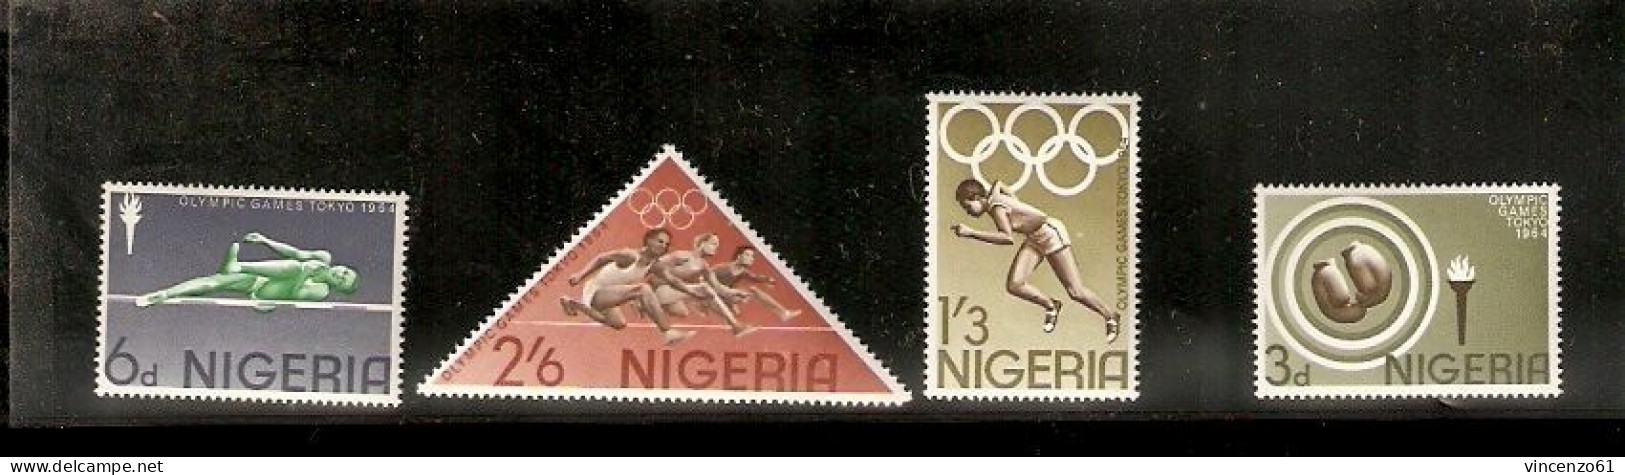 NIGERIA COMPLETE SERIE TOKIO 1964 OLIMPIC GAMES - Zomer 1964: Tokyo